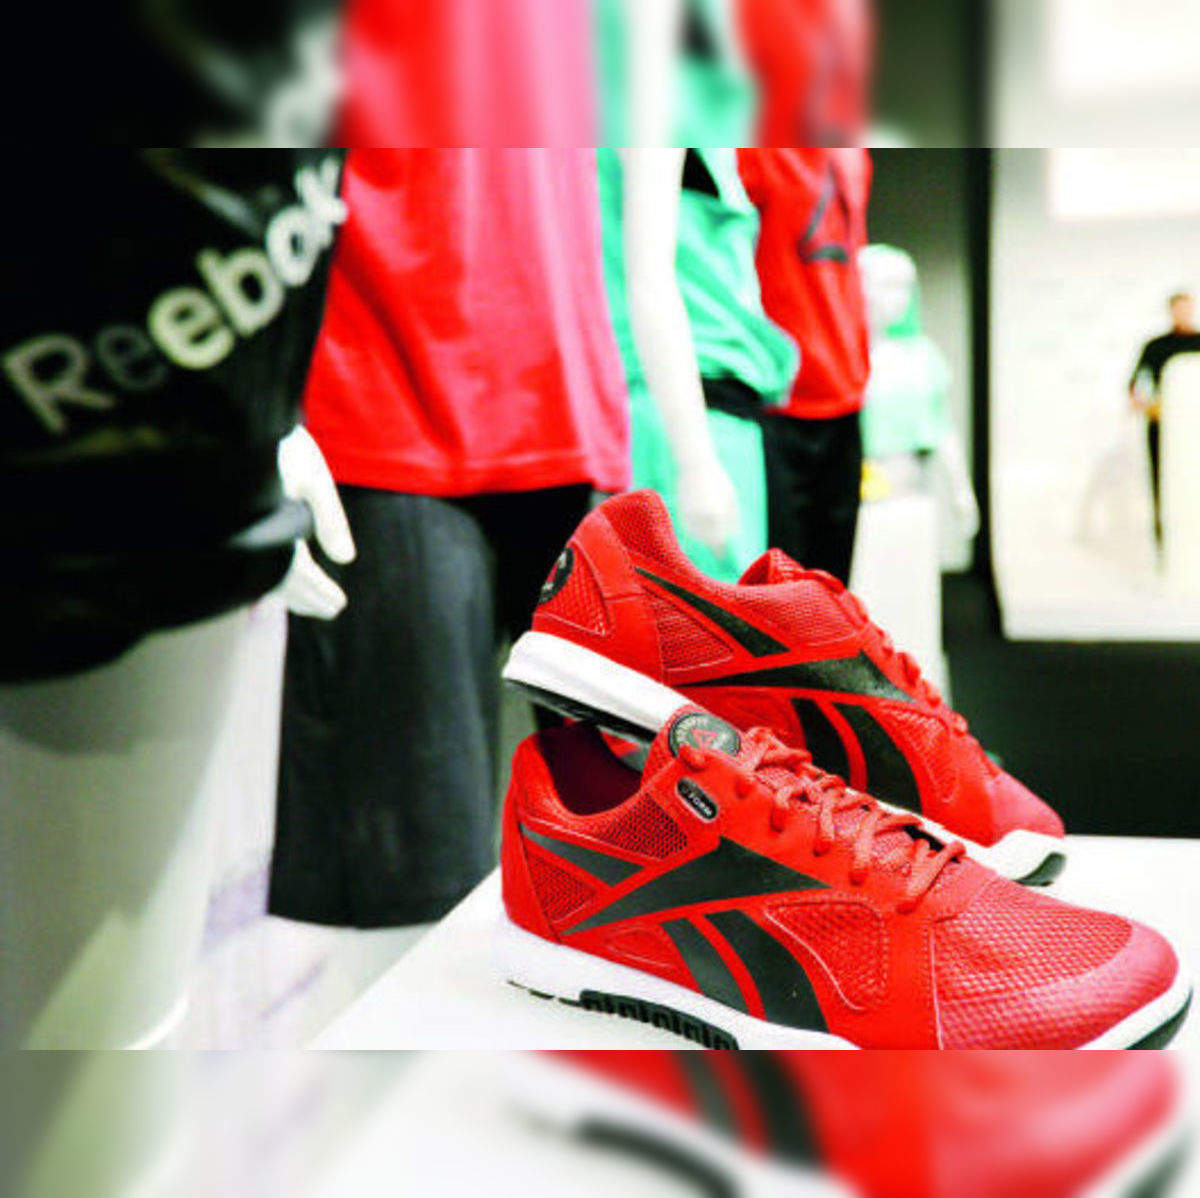 Reebok India: Reebok makes a comeback as a premium fitness brand